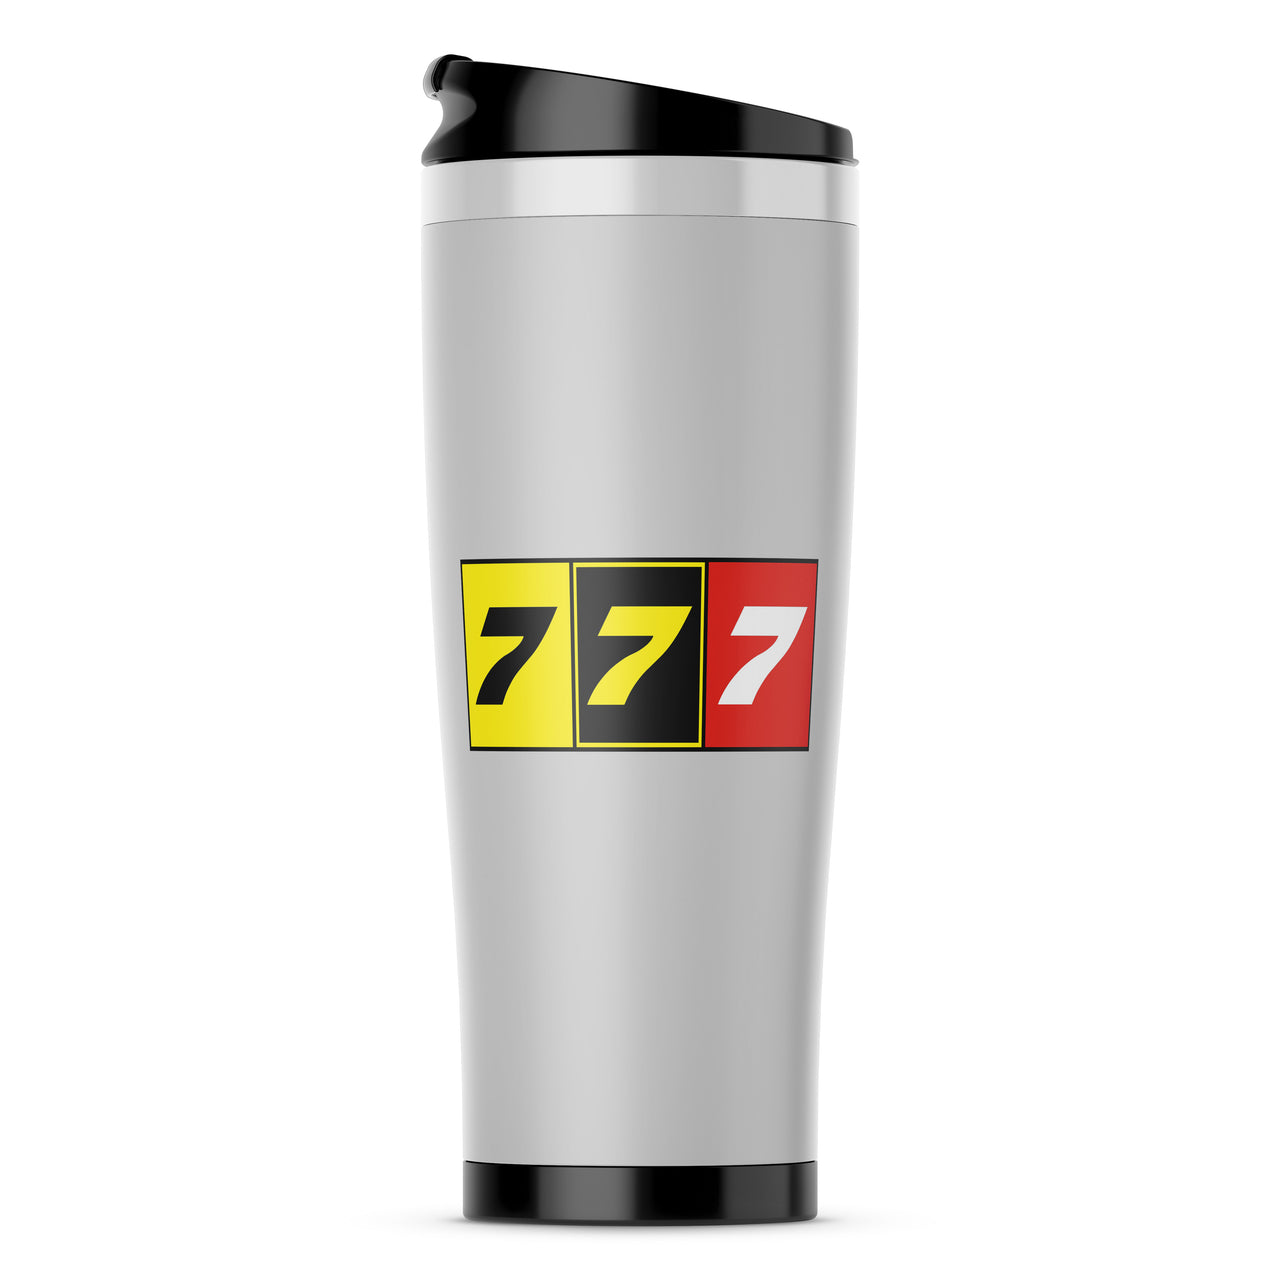 Flat Colourful 777 Designed Travel Mugs